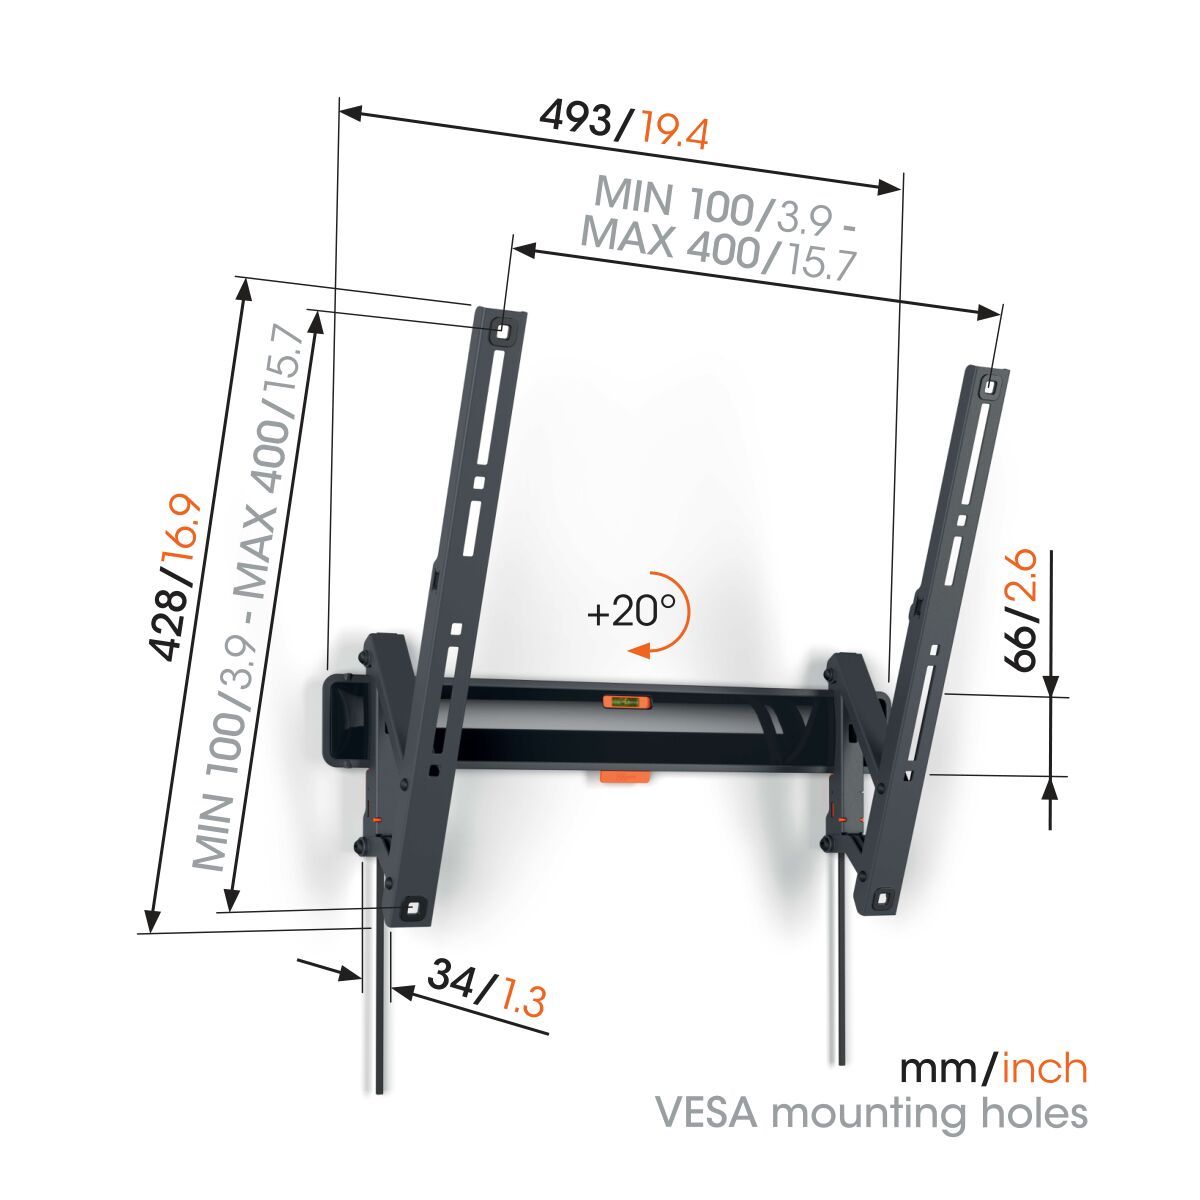 Vogel's TVM 3415 Tilting TV Wall Mount - Suitable for 32 up to 65 inch TVs - Tilt up to 20° - Dimensions